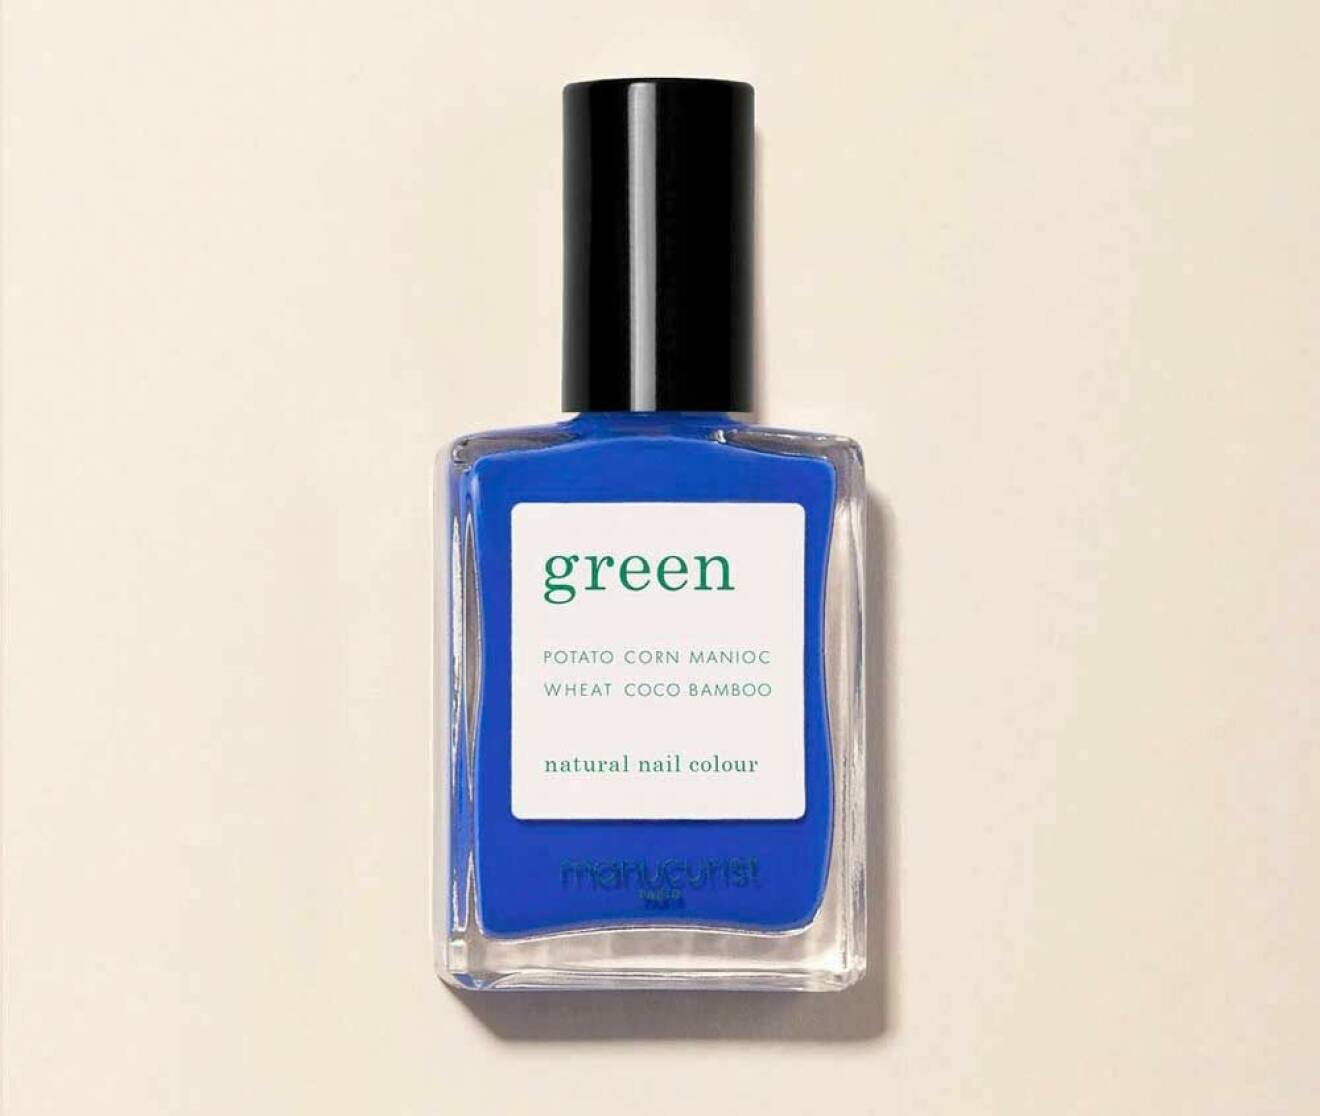 Green Natural Nail Colour, Manucurist.